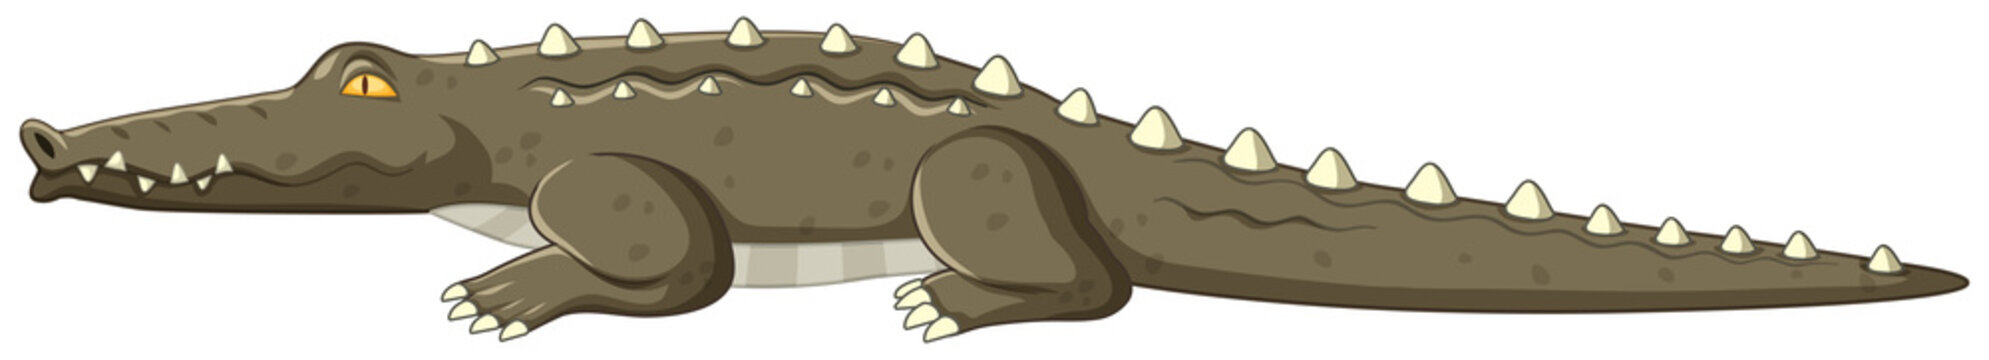 Alligator cartoon character isolated on white background